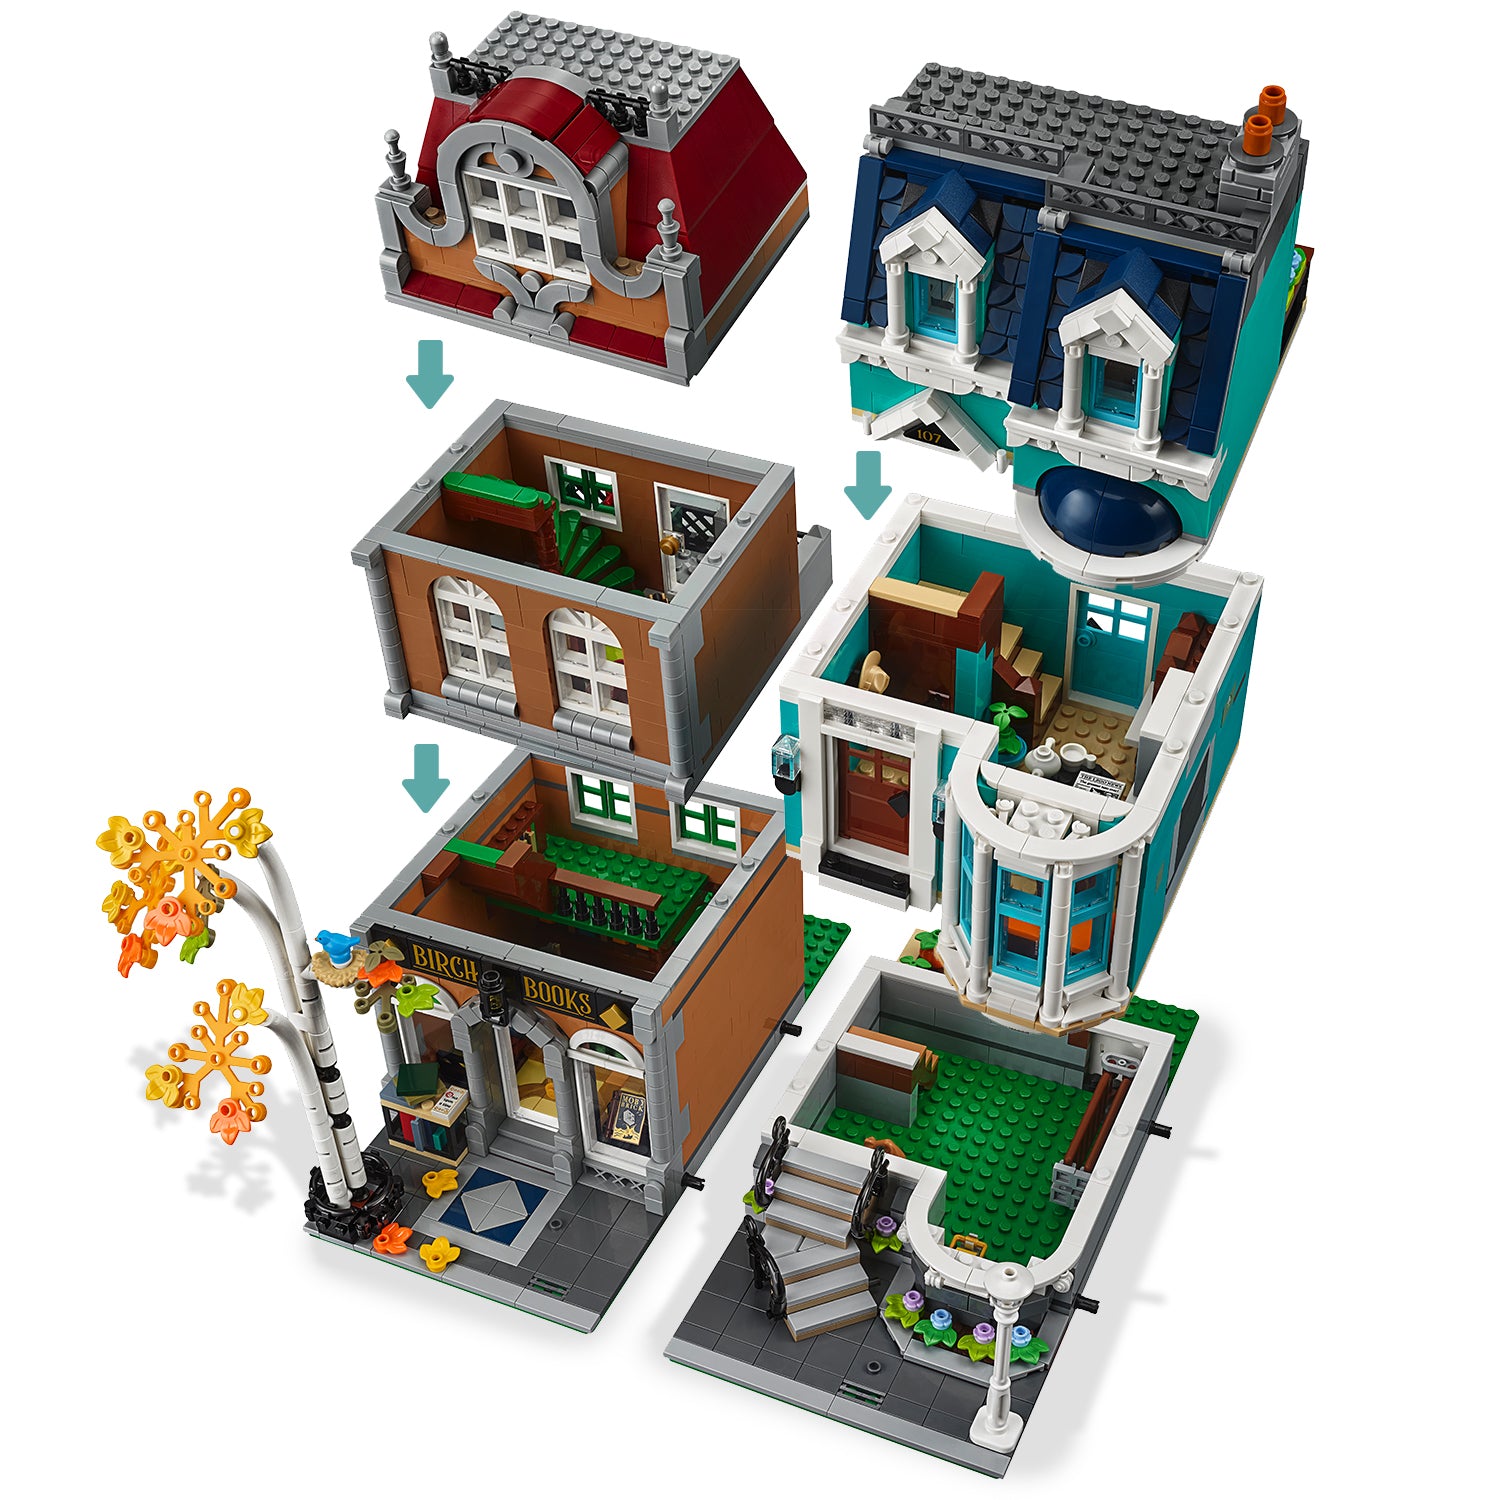 10270 - LEGO - Creator Expert - Libreria